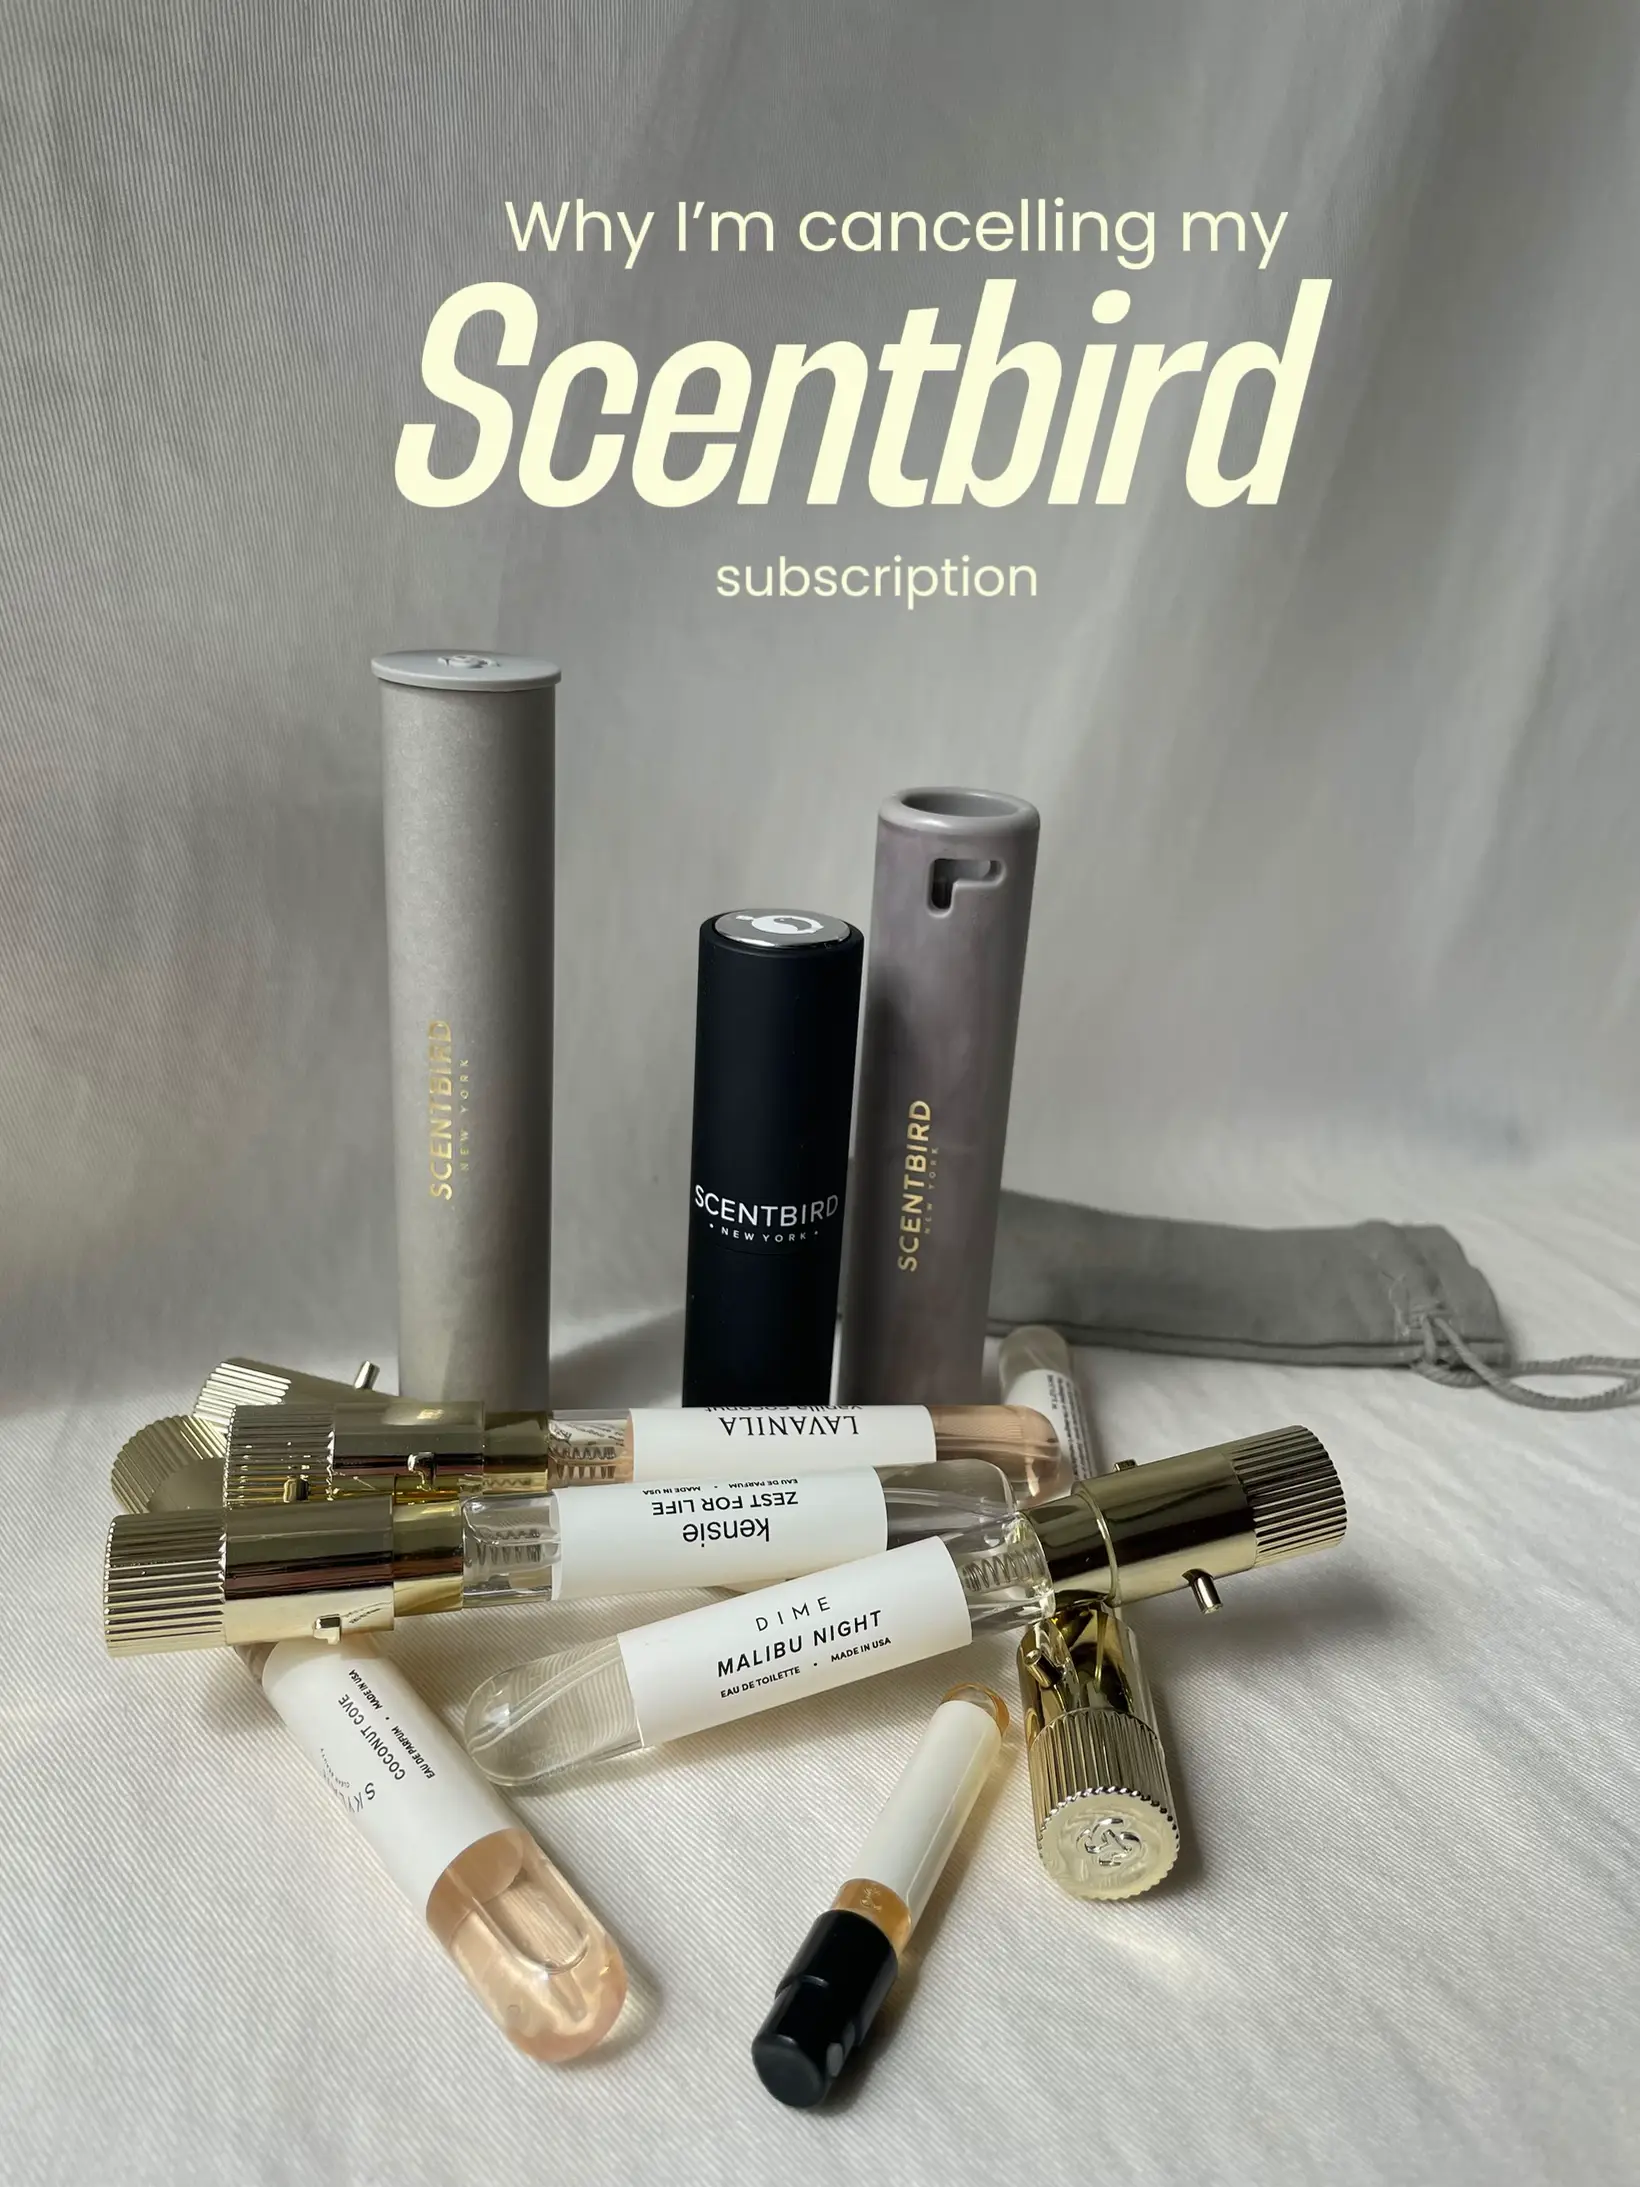 Buy DIME BEAUTY Malibu Night perfume at Scentbird